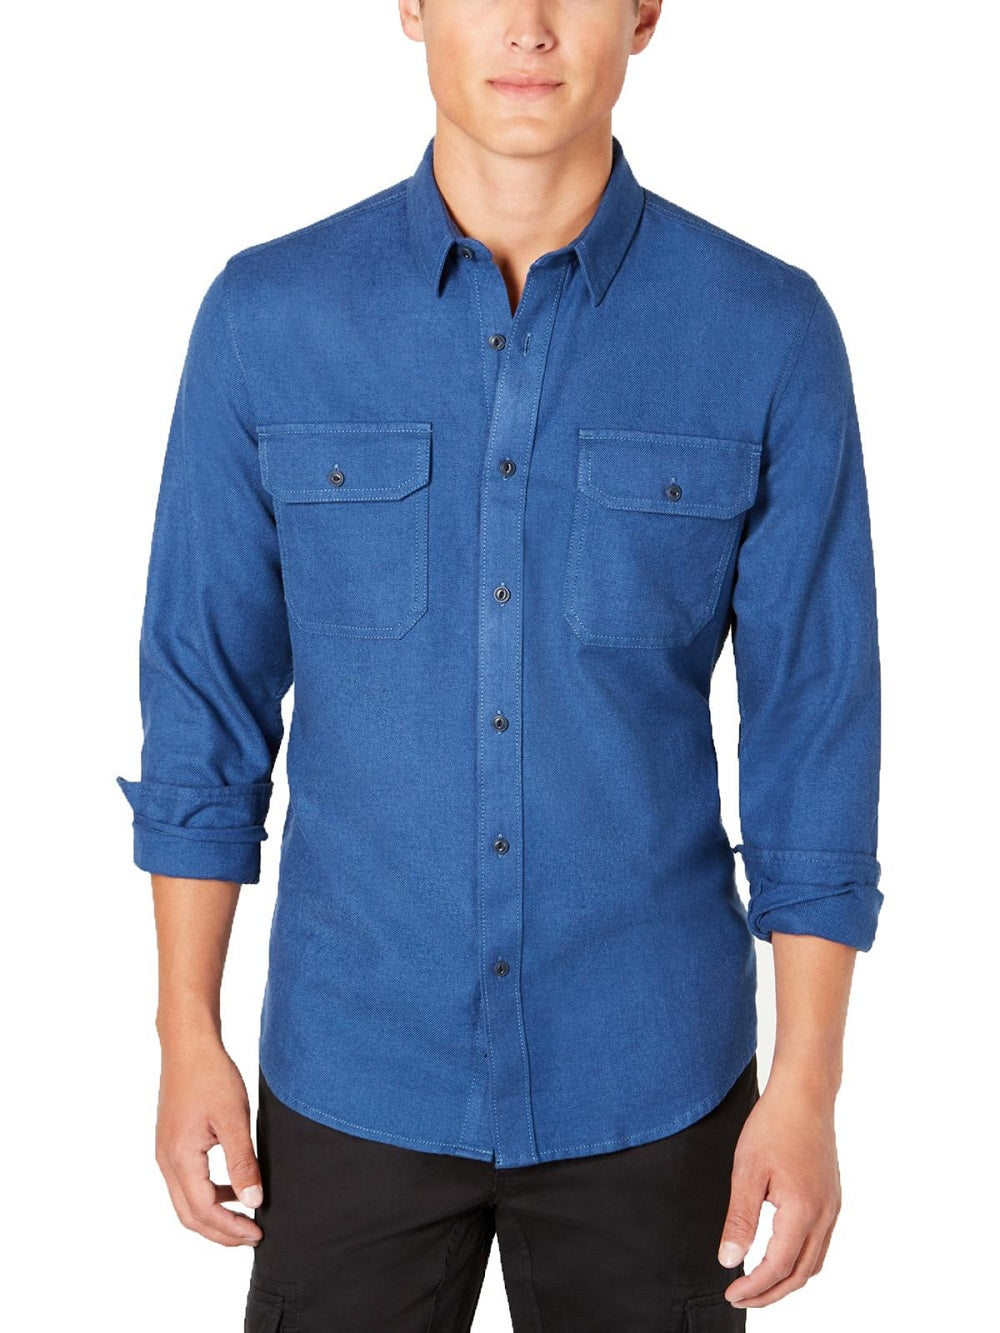 American Rag Men's Grindle Textured Shirt  Blue